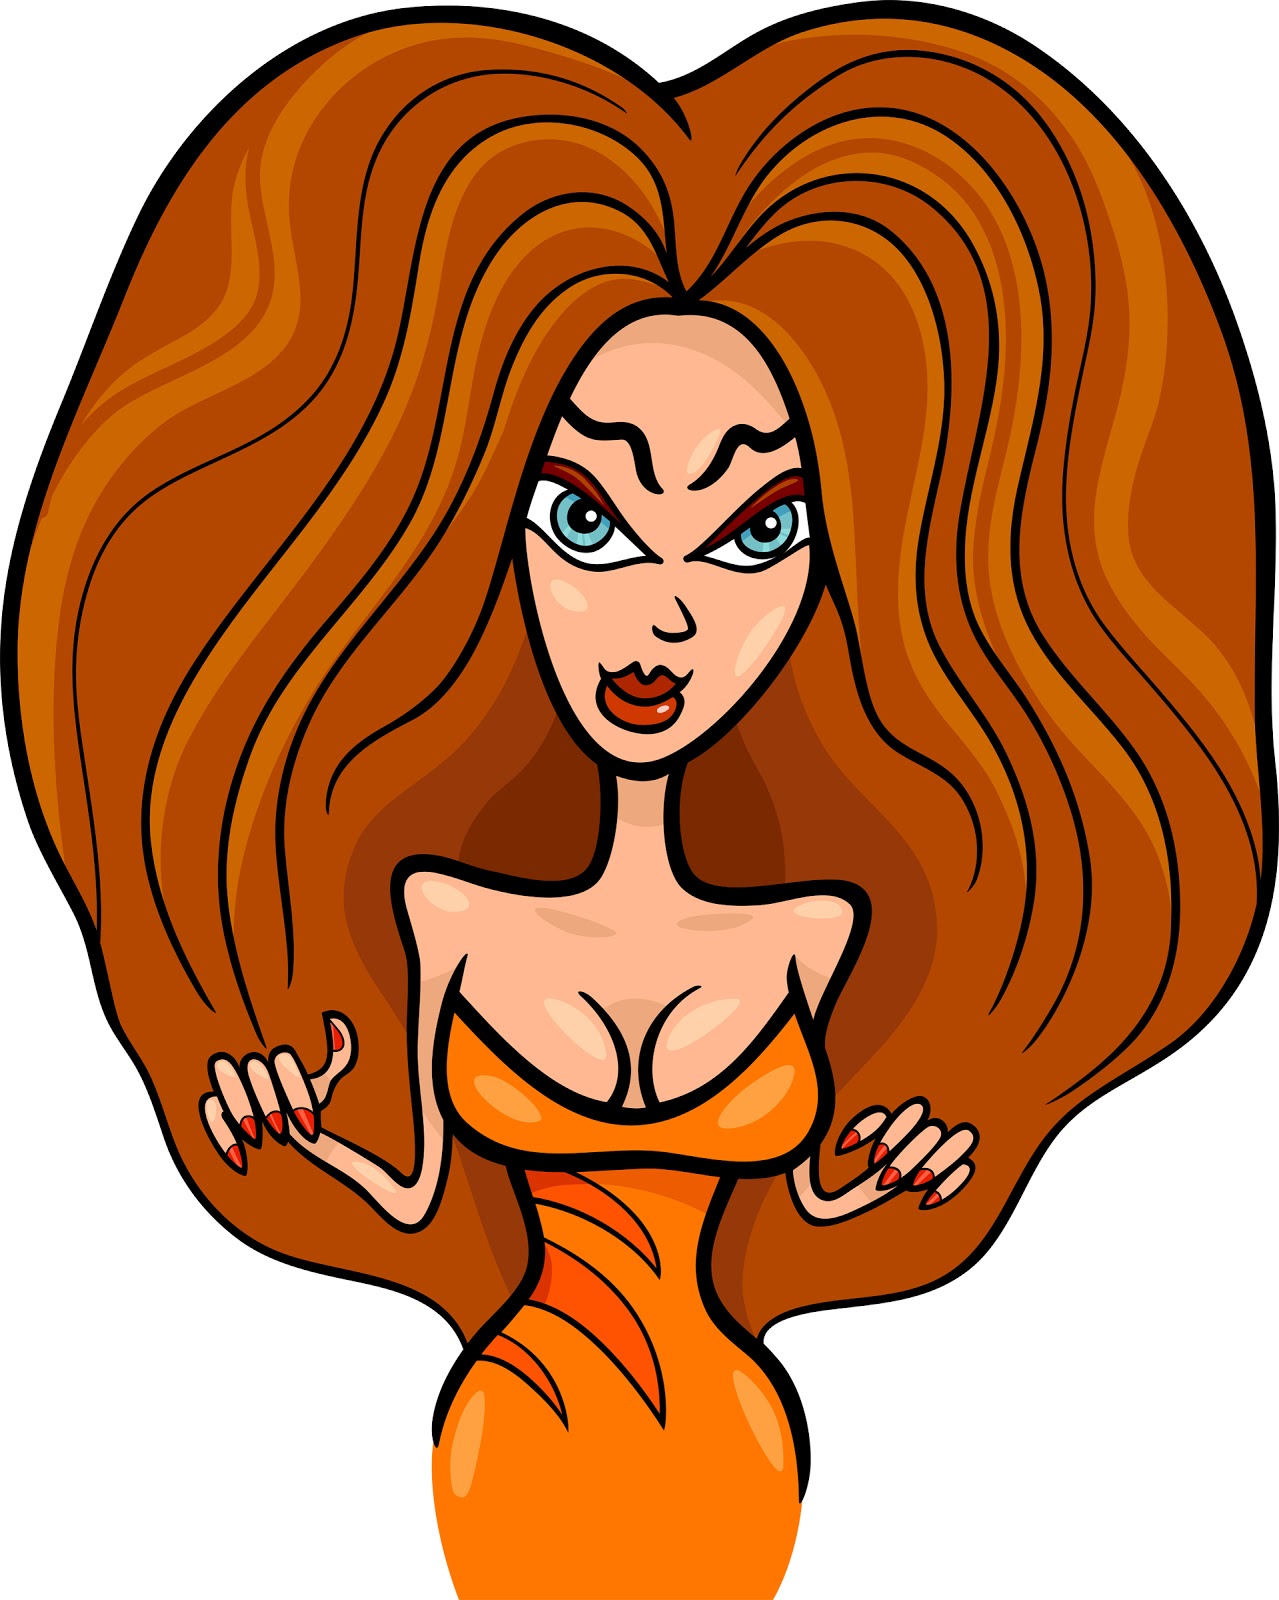 http://1.bp.blogspot.com/-SgvwogDTxXI/UQBHiP8lP8I/AAAAAAAAHcA/zw1eDWRGpTo/s1600/hair+orange.jpg